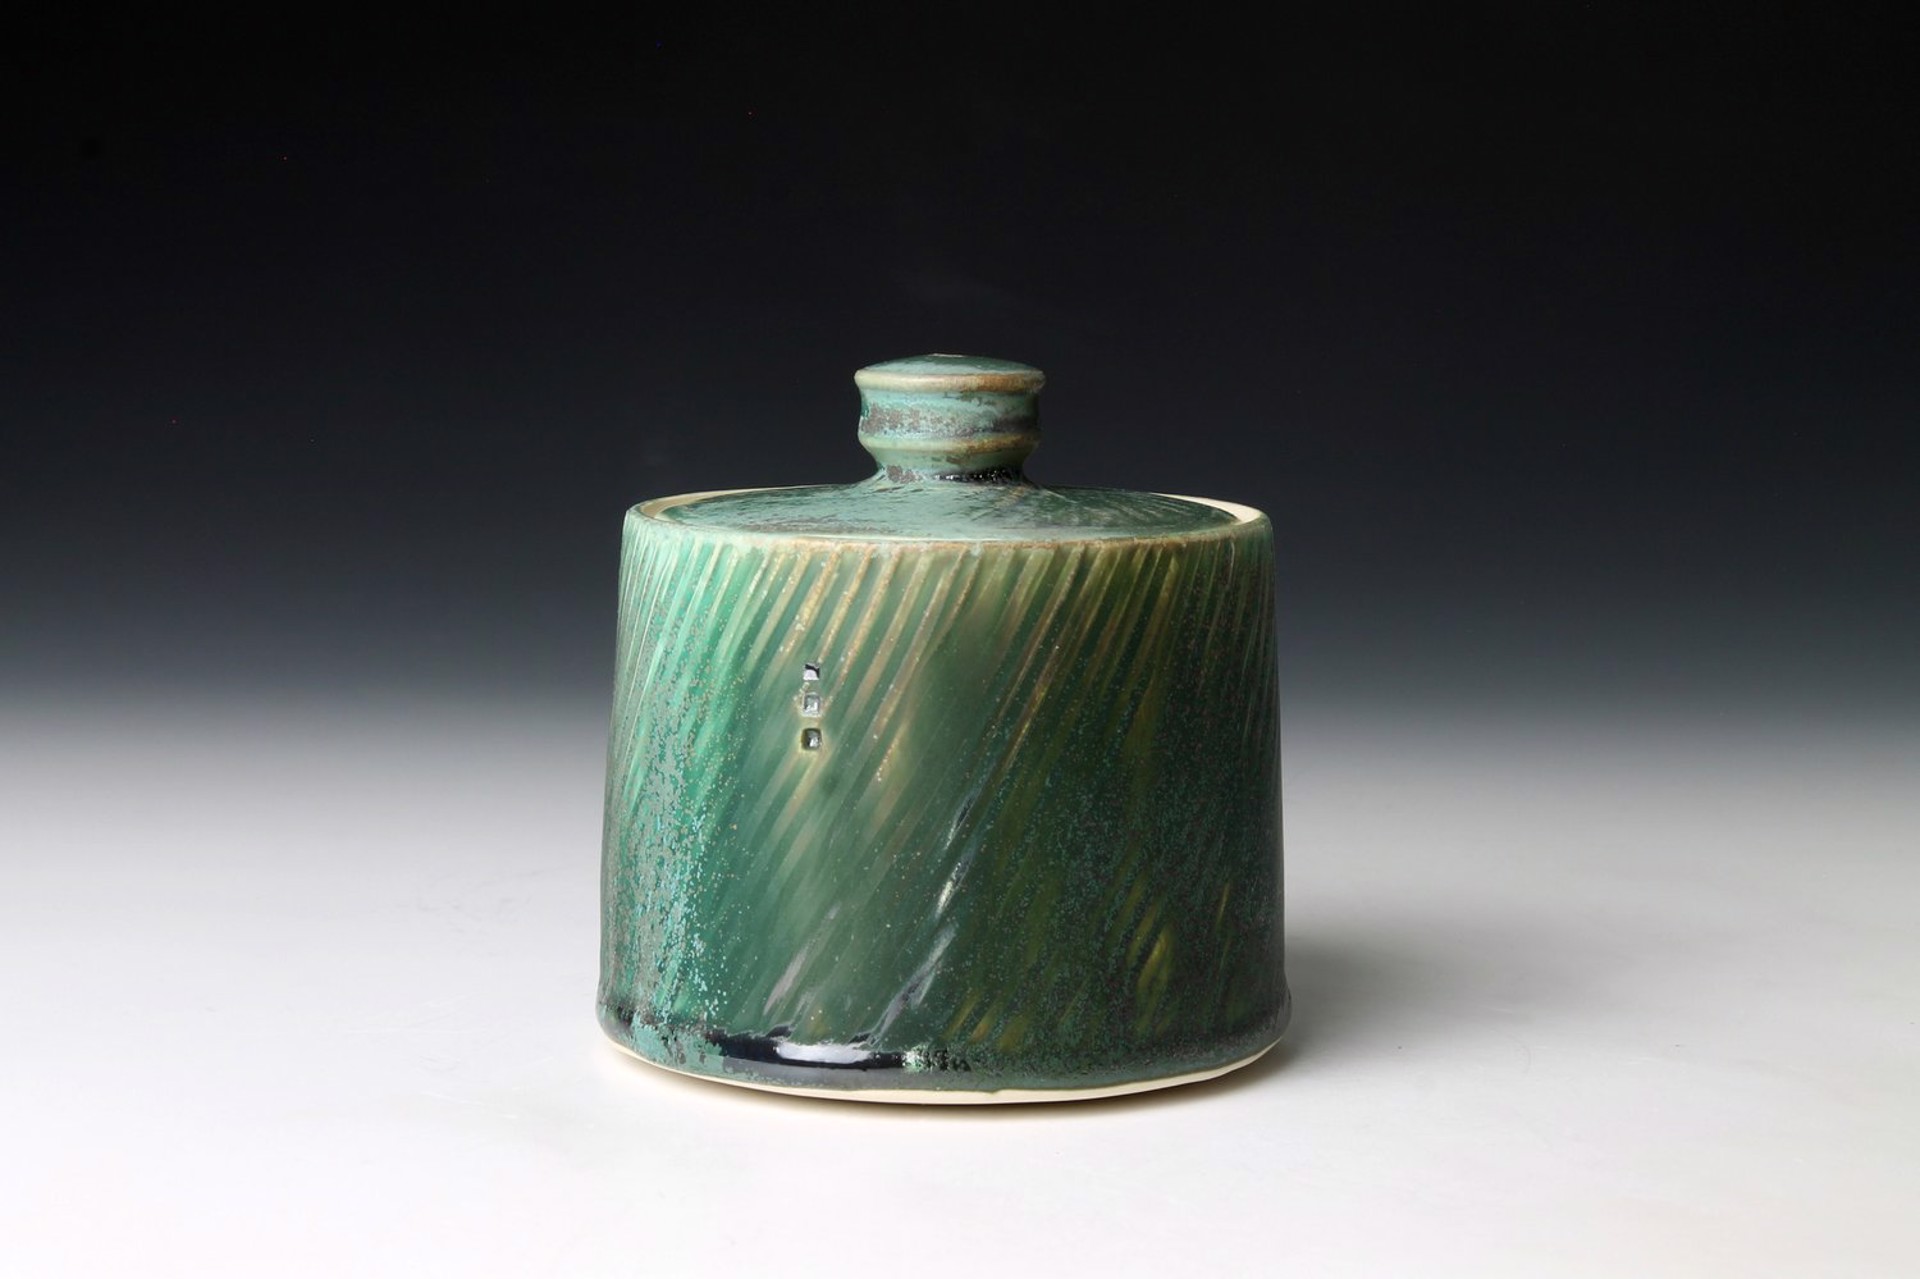 Green Jar by Nick DeVries